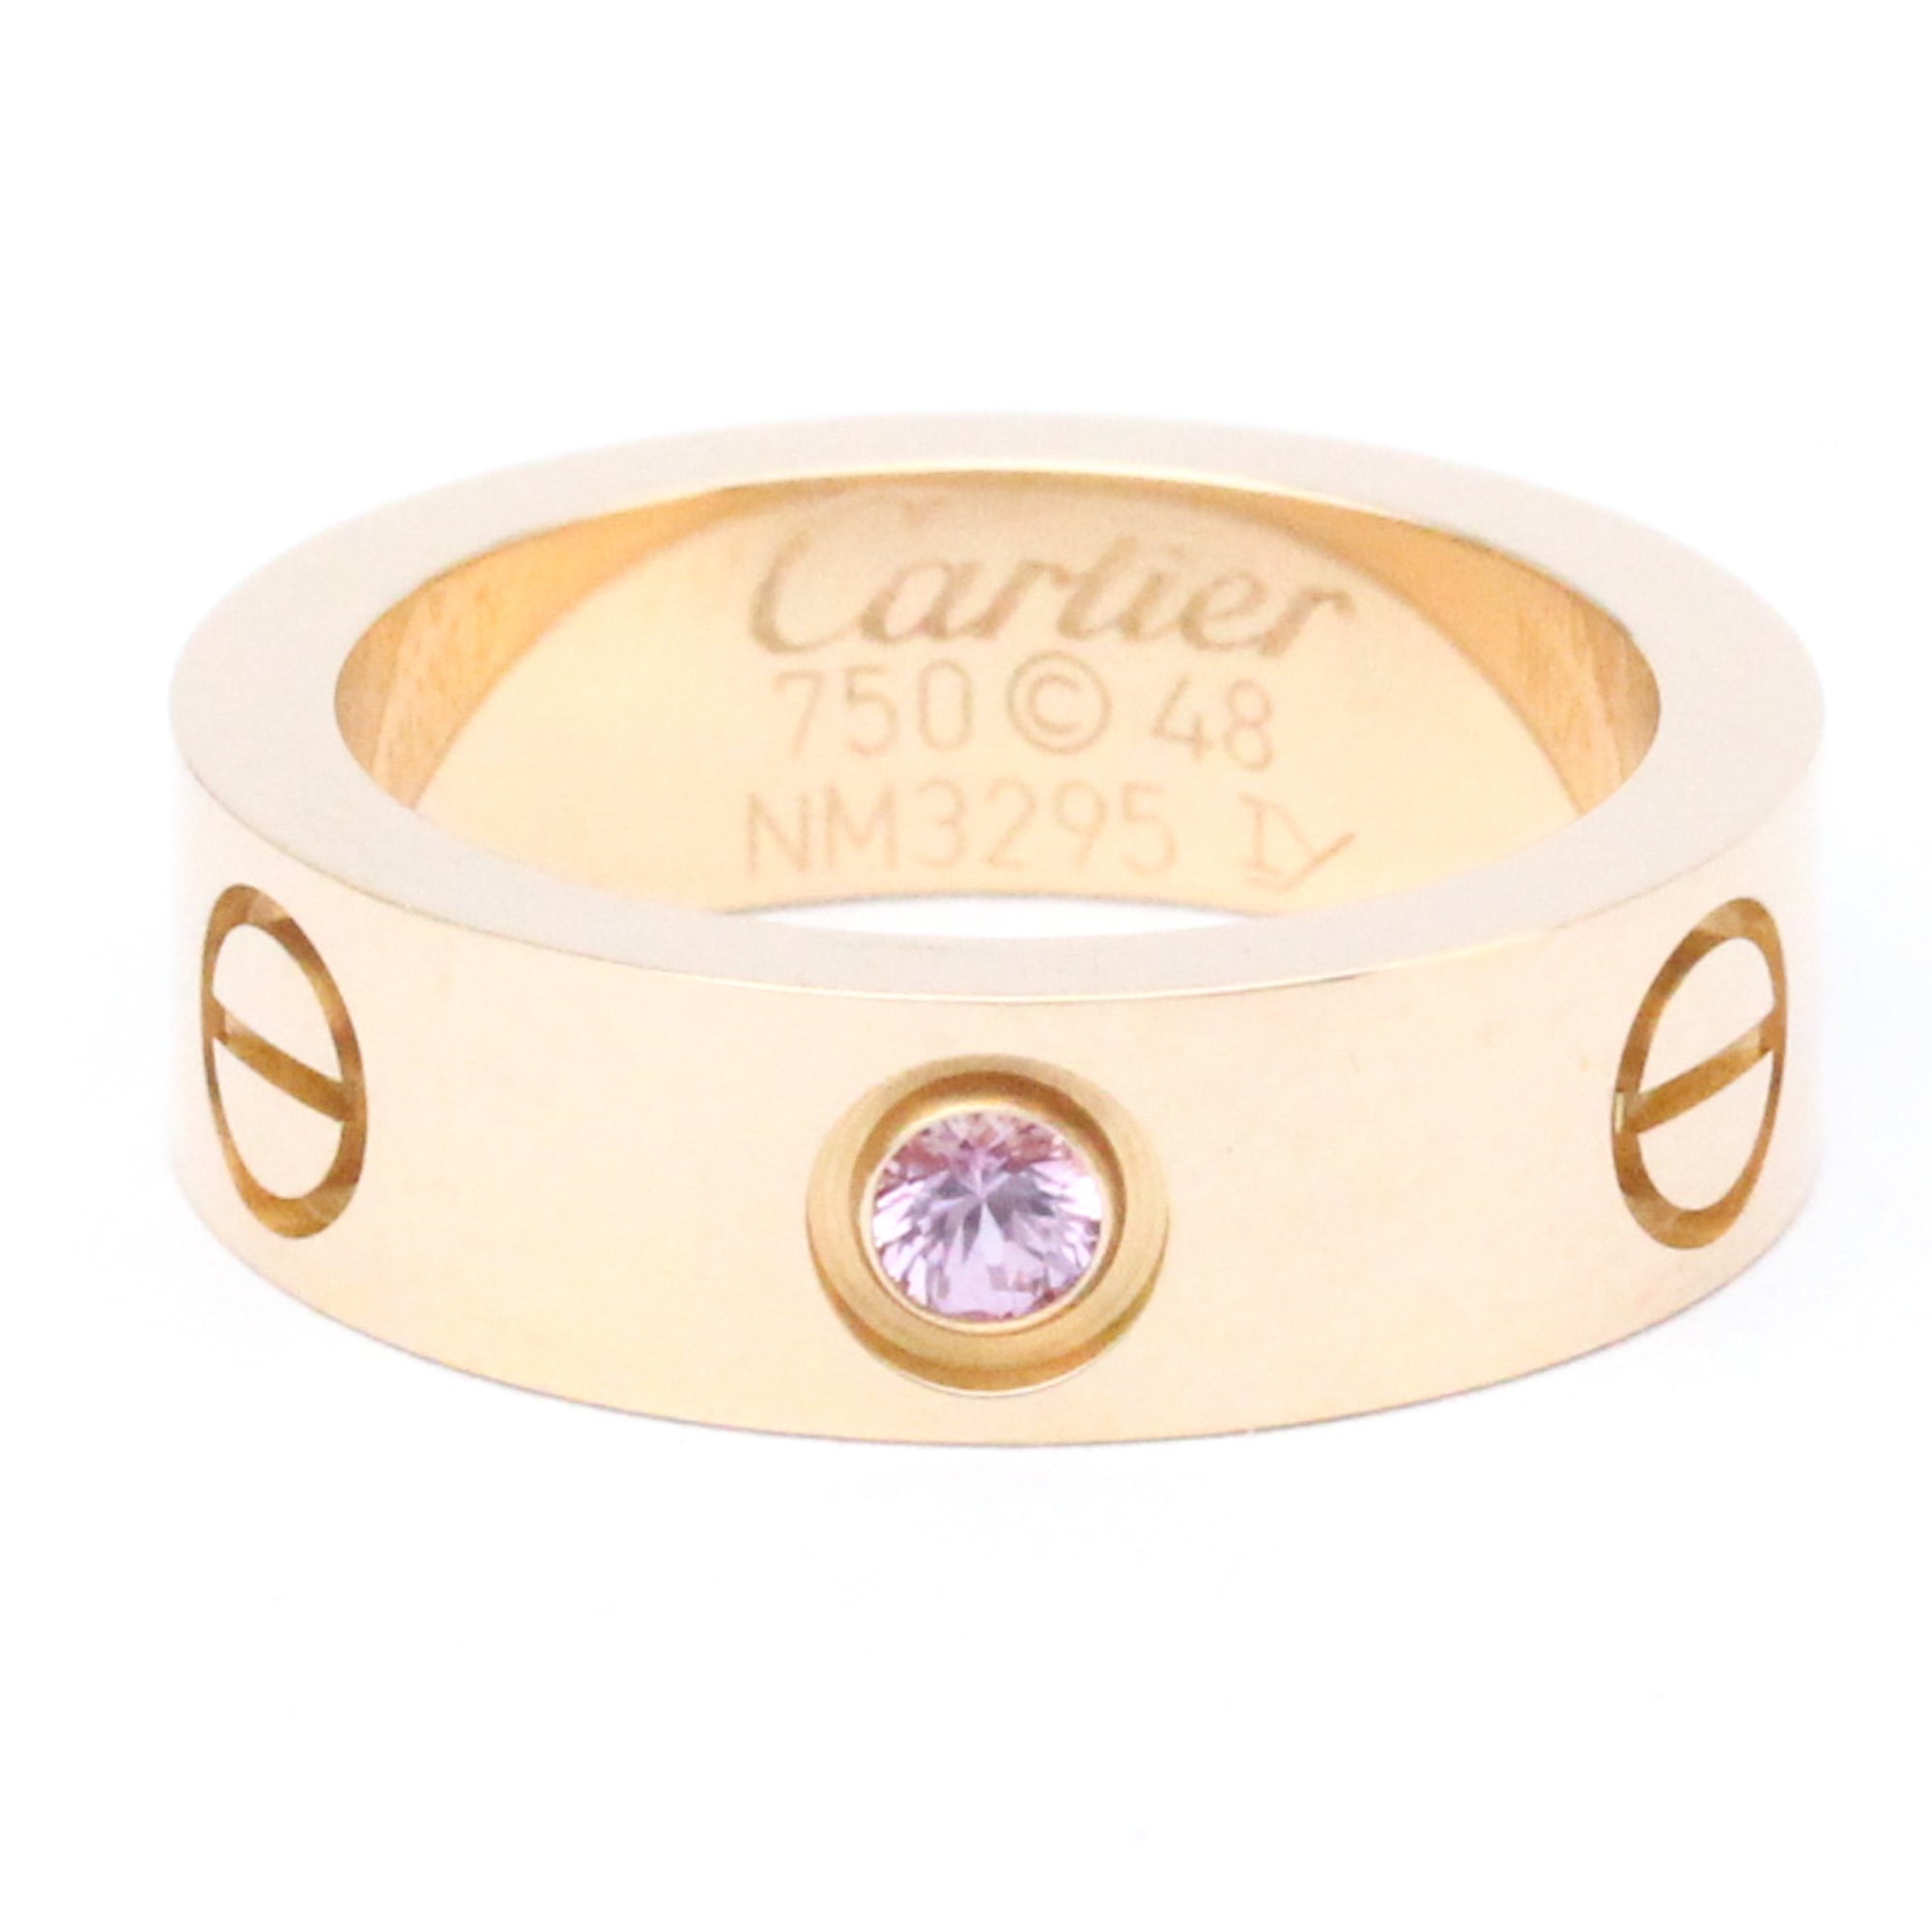 Cartier Love Diamond Pink Sapphire Band Ring